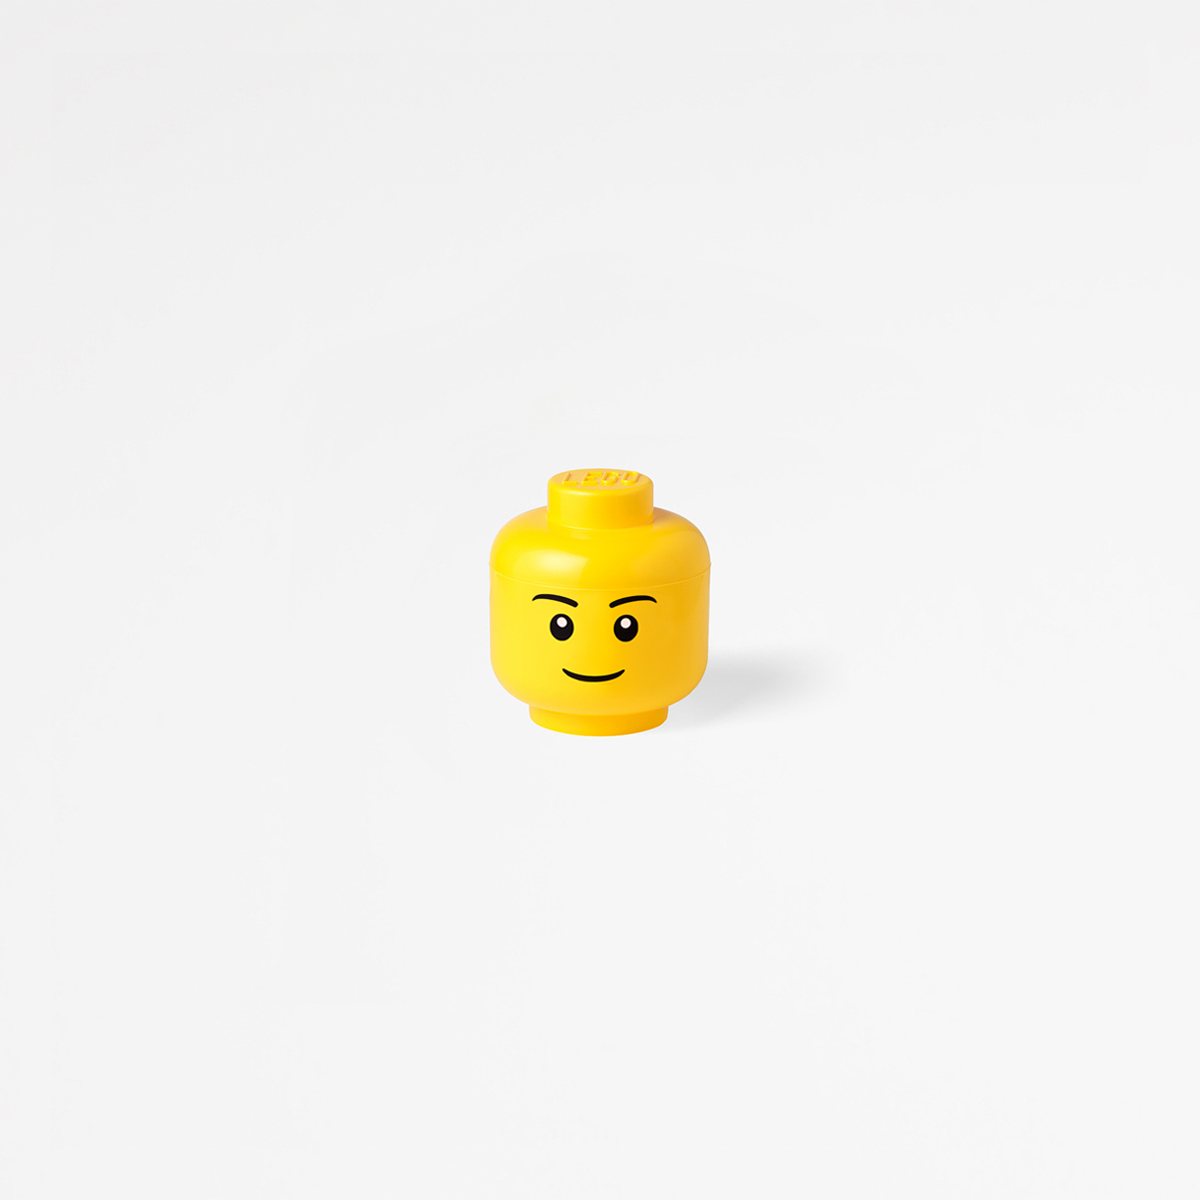 2018, Toy NEUF Room Copenhagen Lego Storage Head Small Boy 